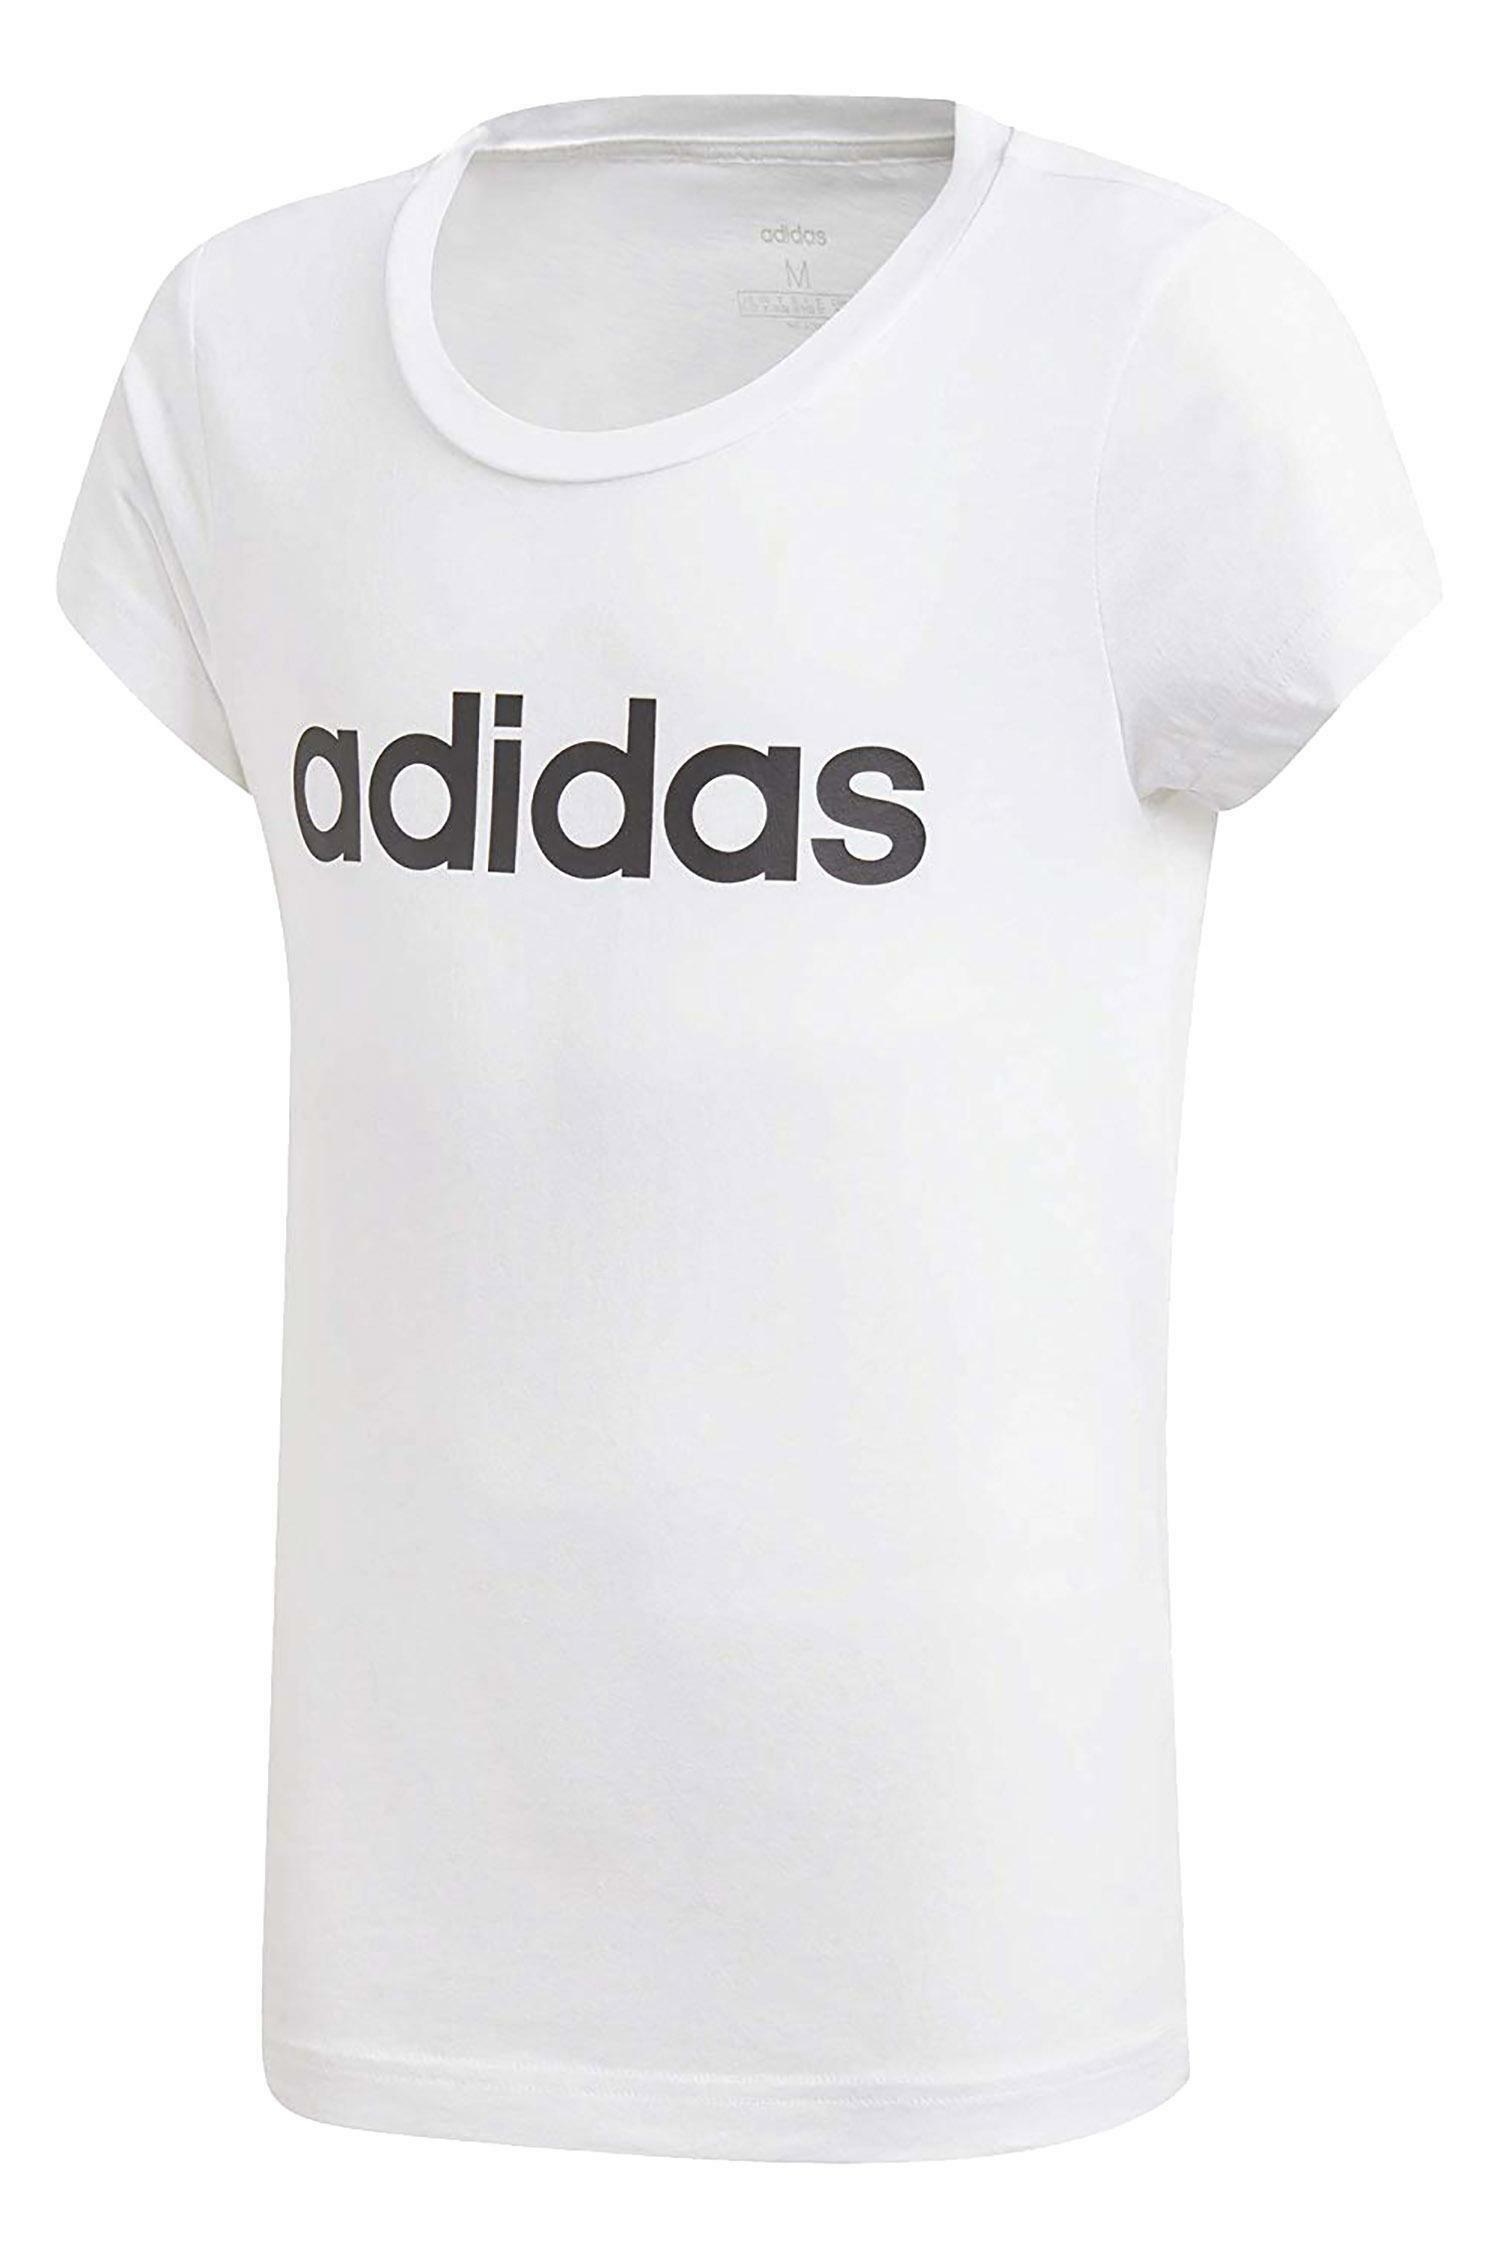 adidas adidas y g e lin tee t-shirt bambina bianca dv0357